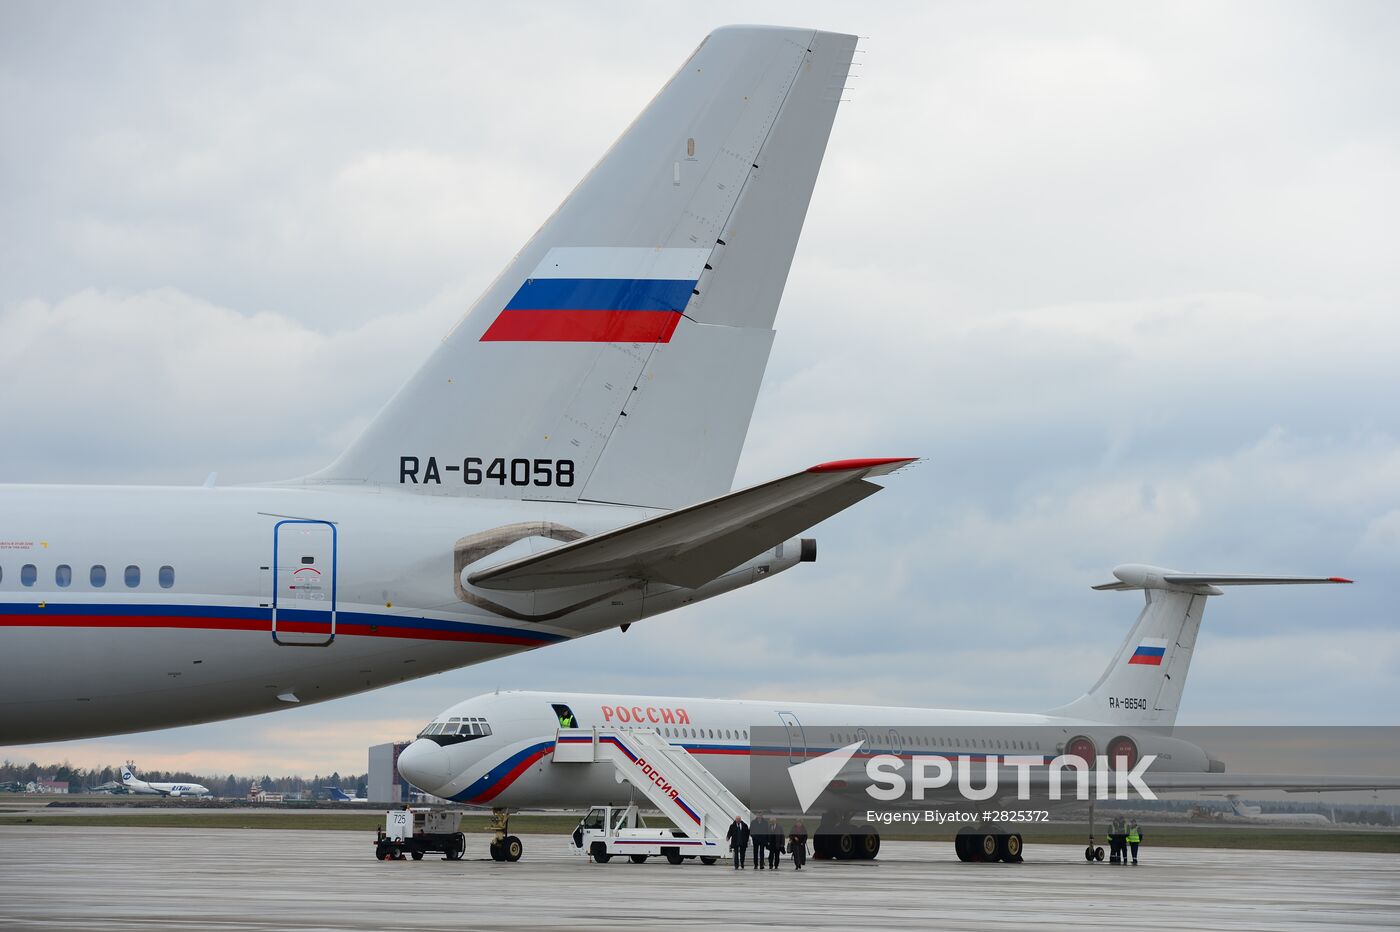 Rossiya special-purpose air unit aircraft are given names